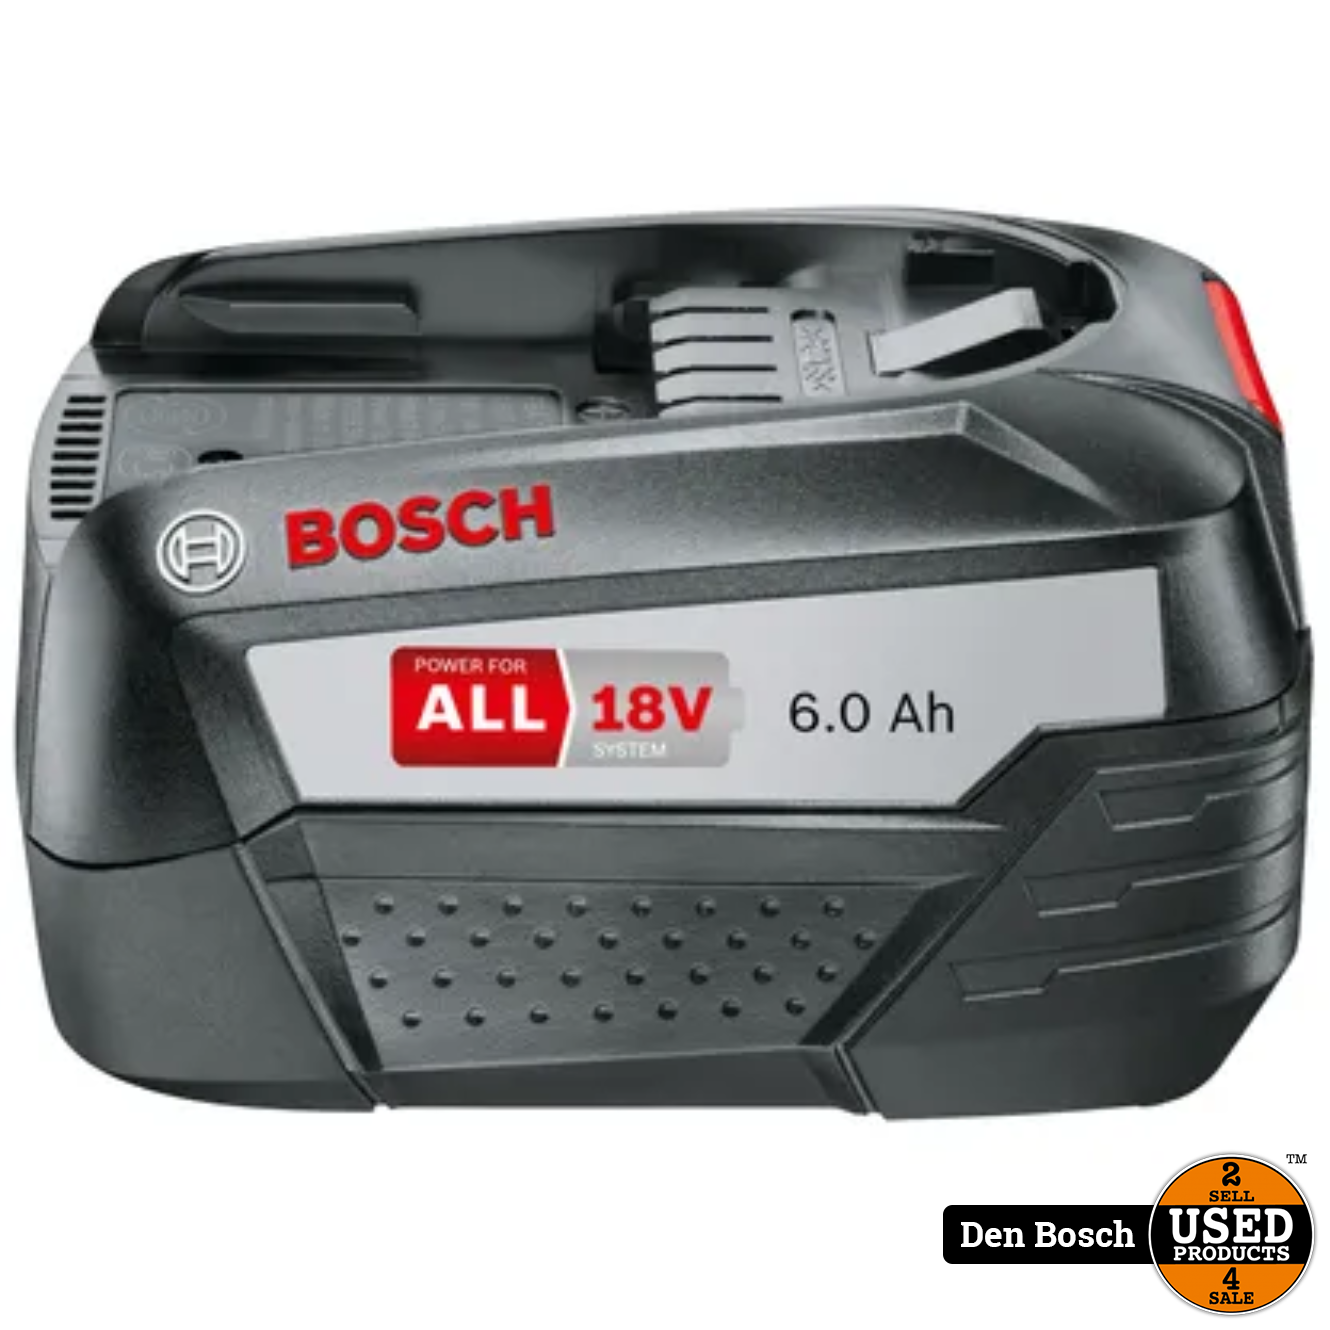 gelijktijdig Menstruatie optellen Bosch Accu 18v 6.0ah - Used Products Den Bosch